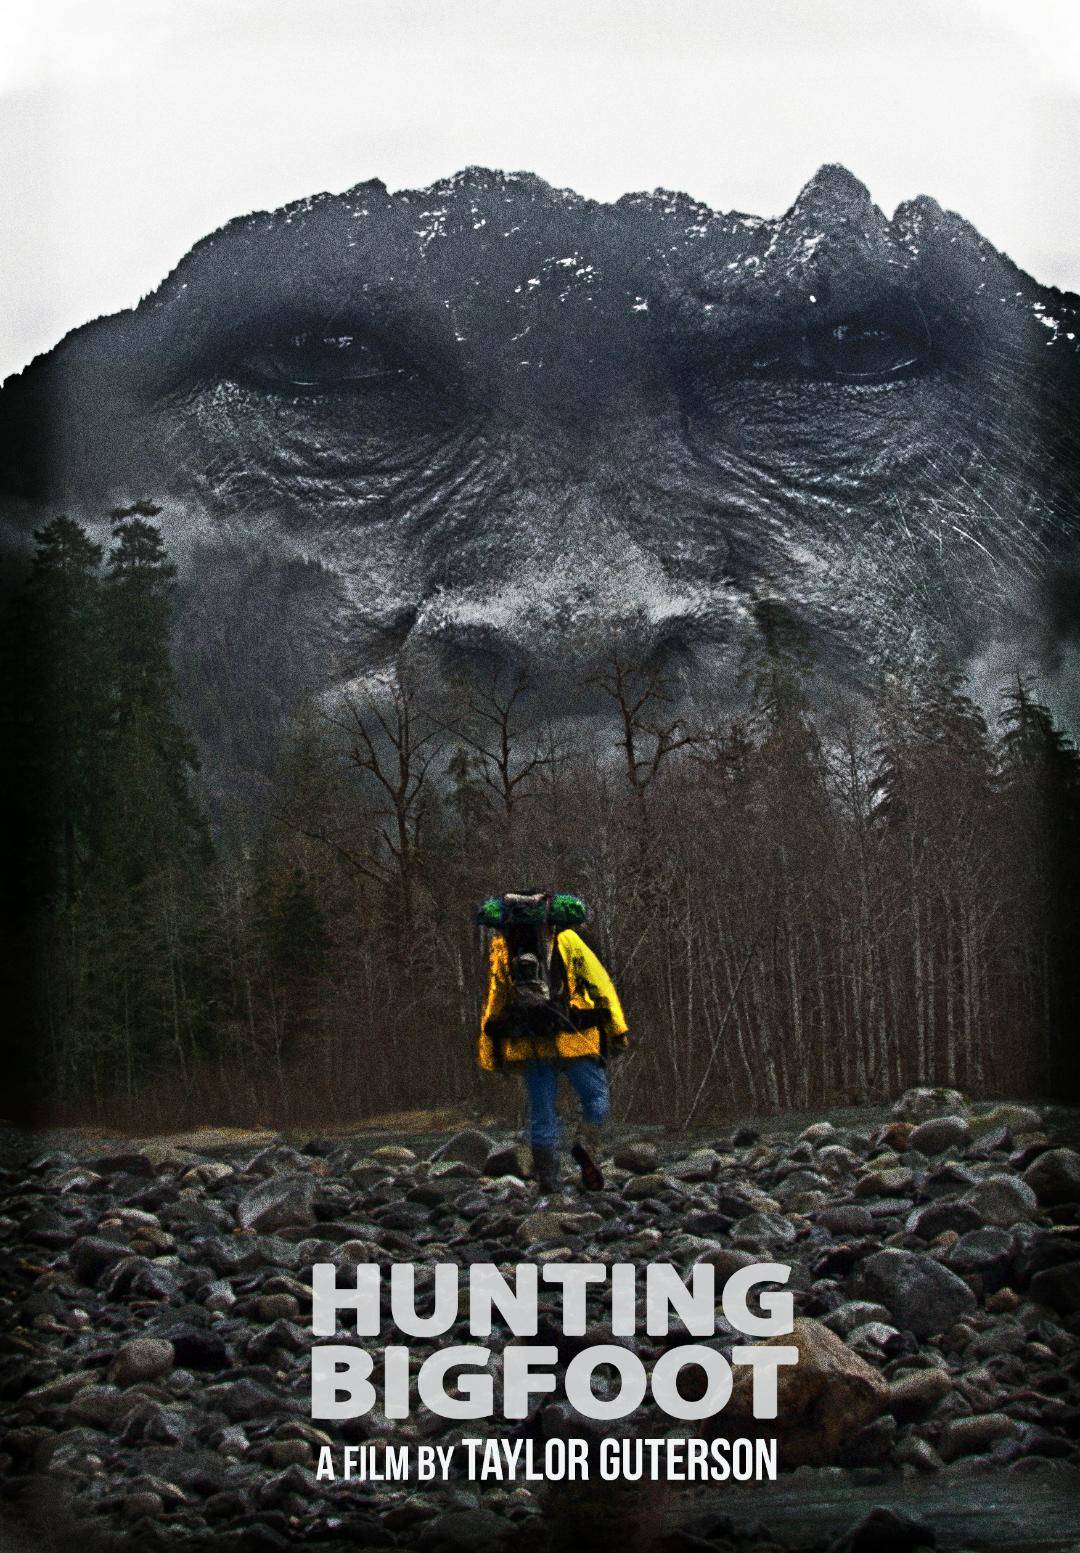 “Hunting Bigfoot” movie poster